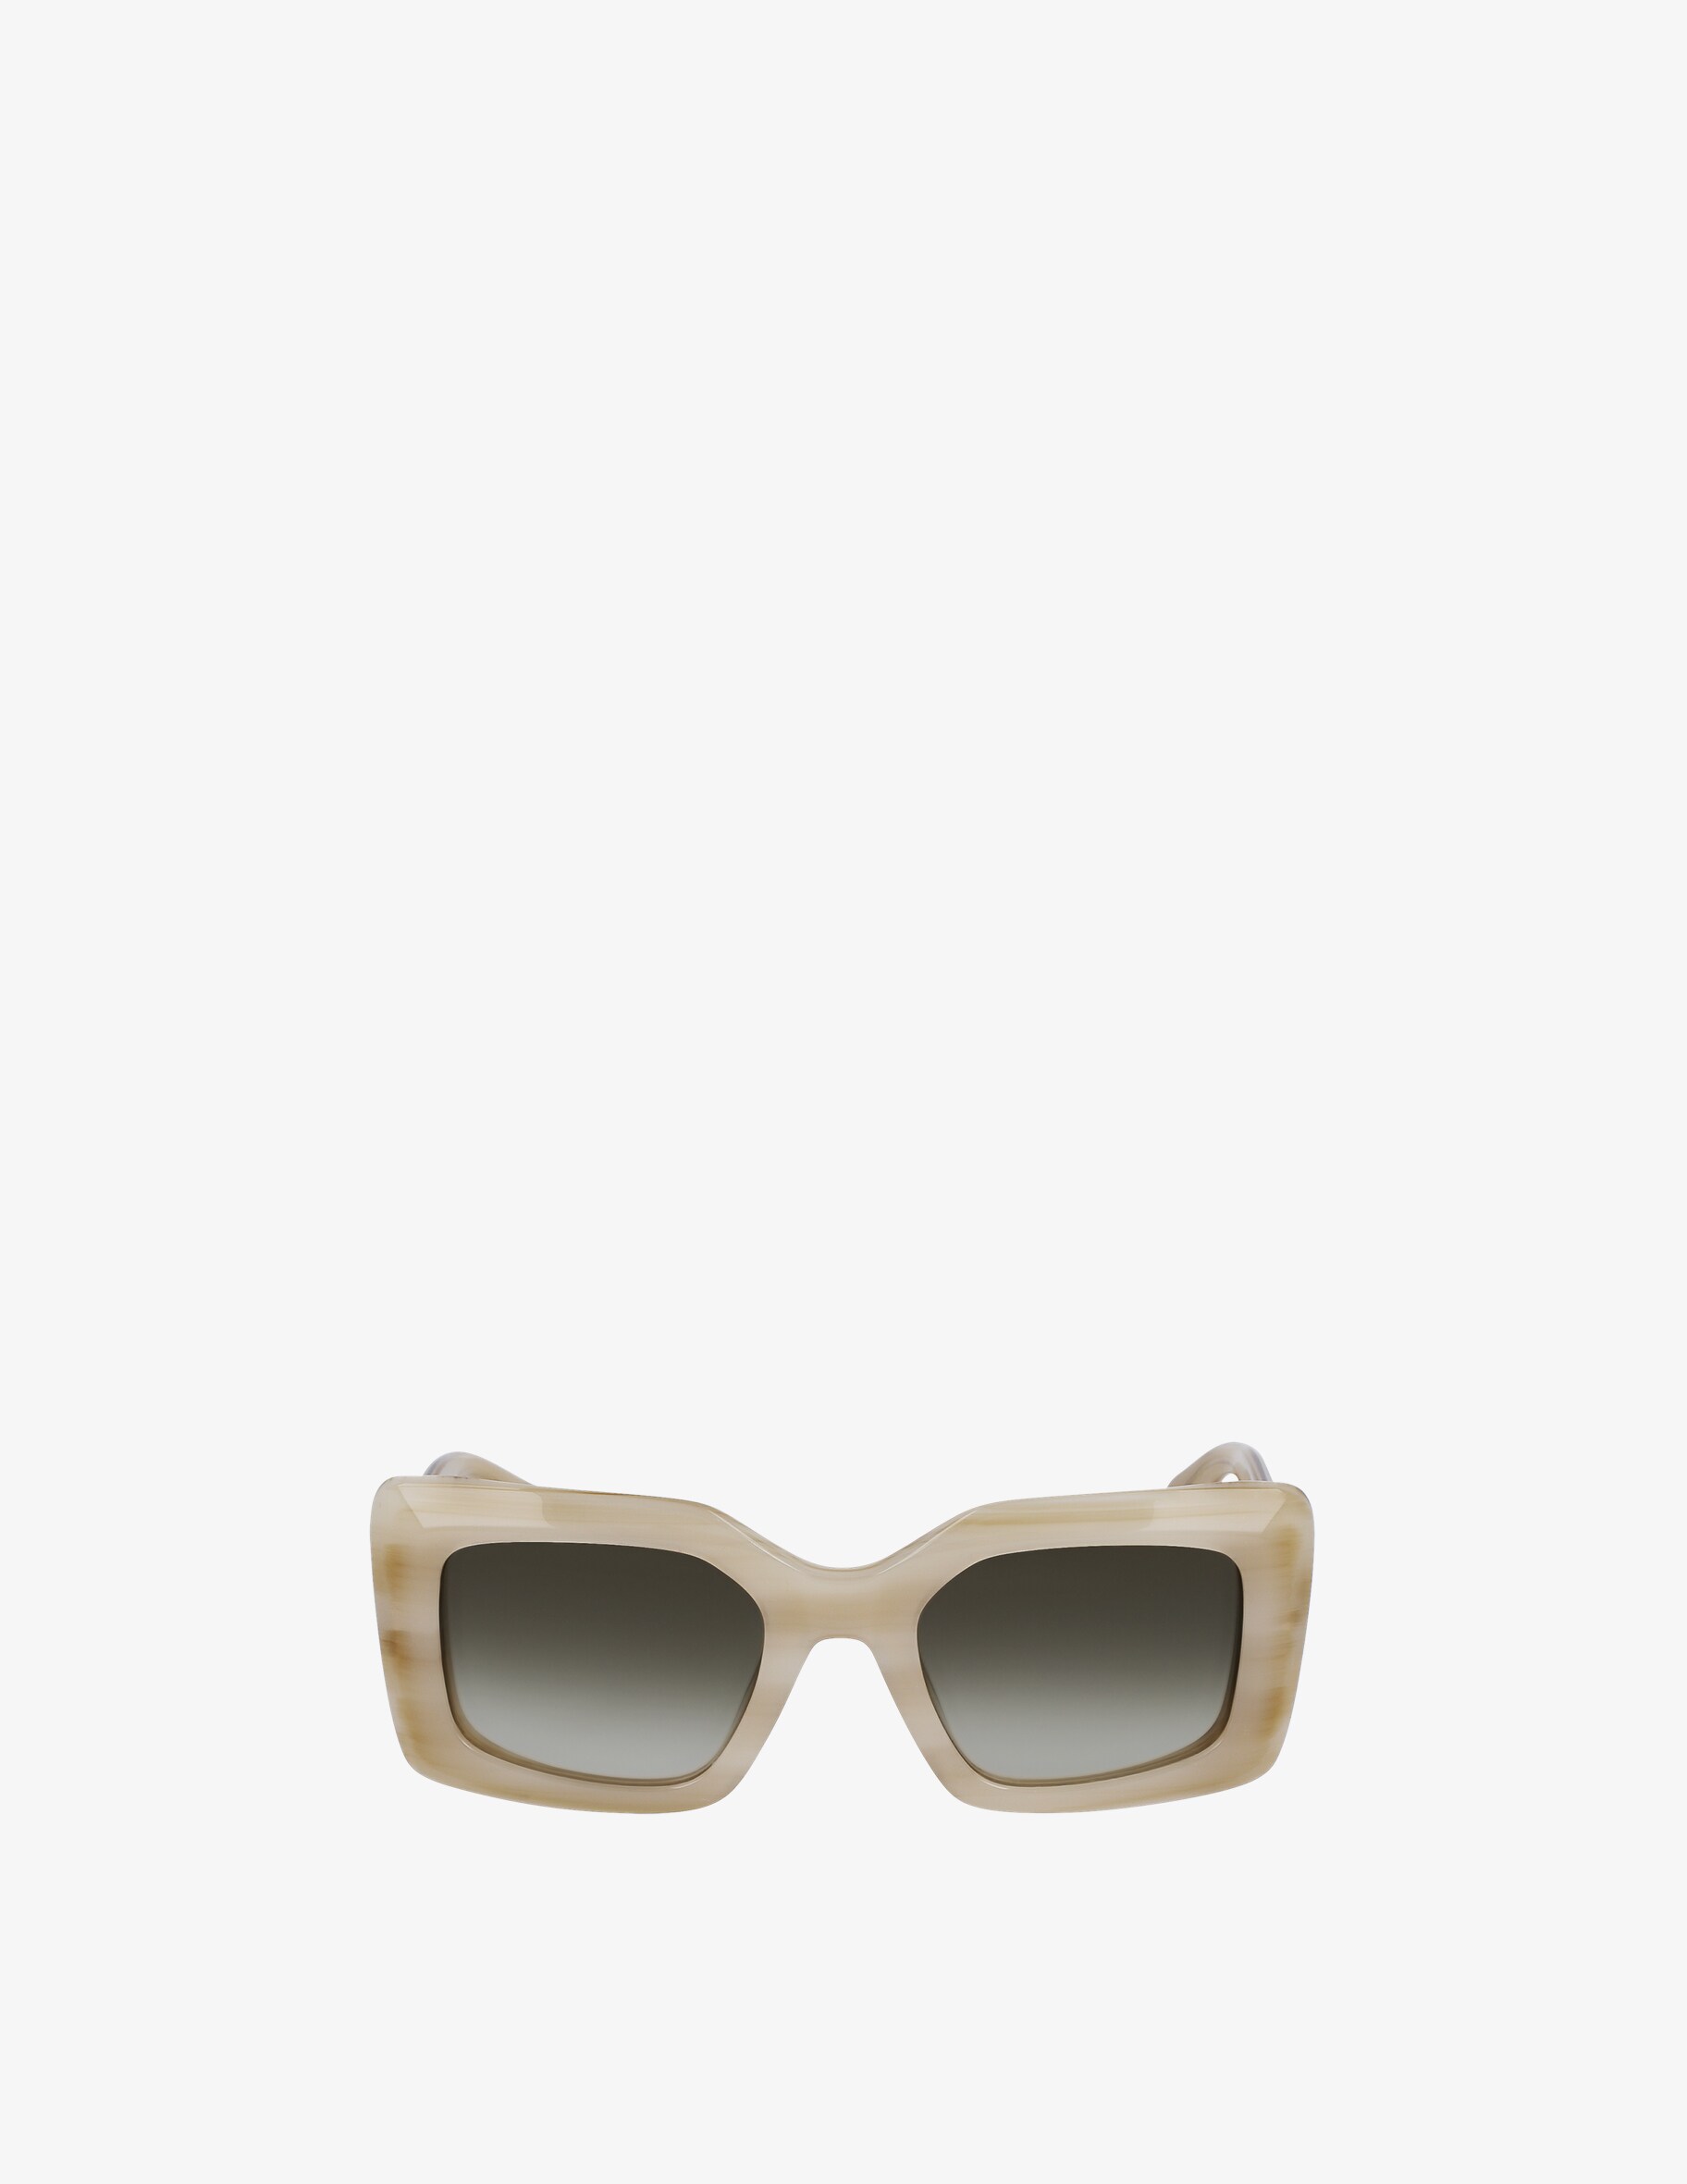 цена Солнцезащитные очки LNV649S в квадратной оправе Lanvin, цвет Ivory Horn